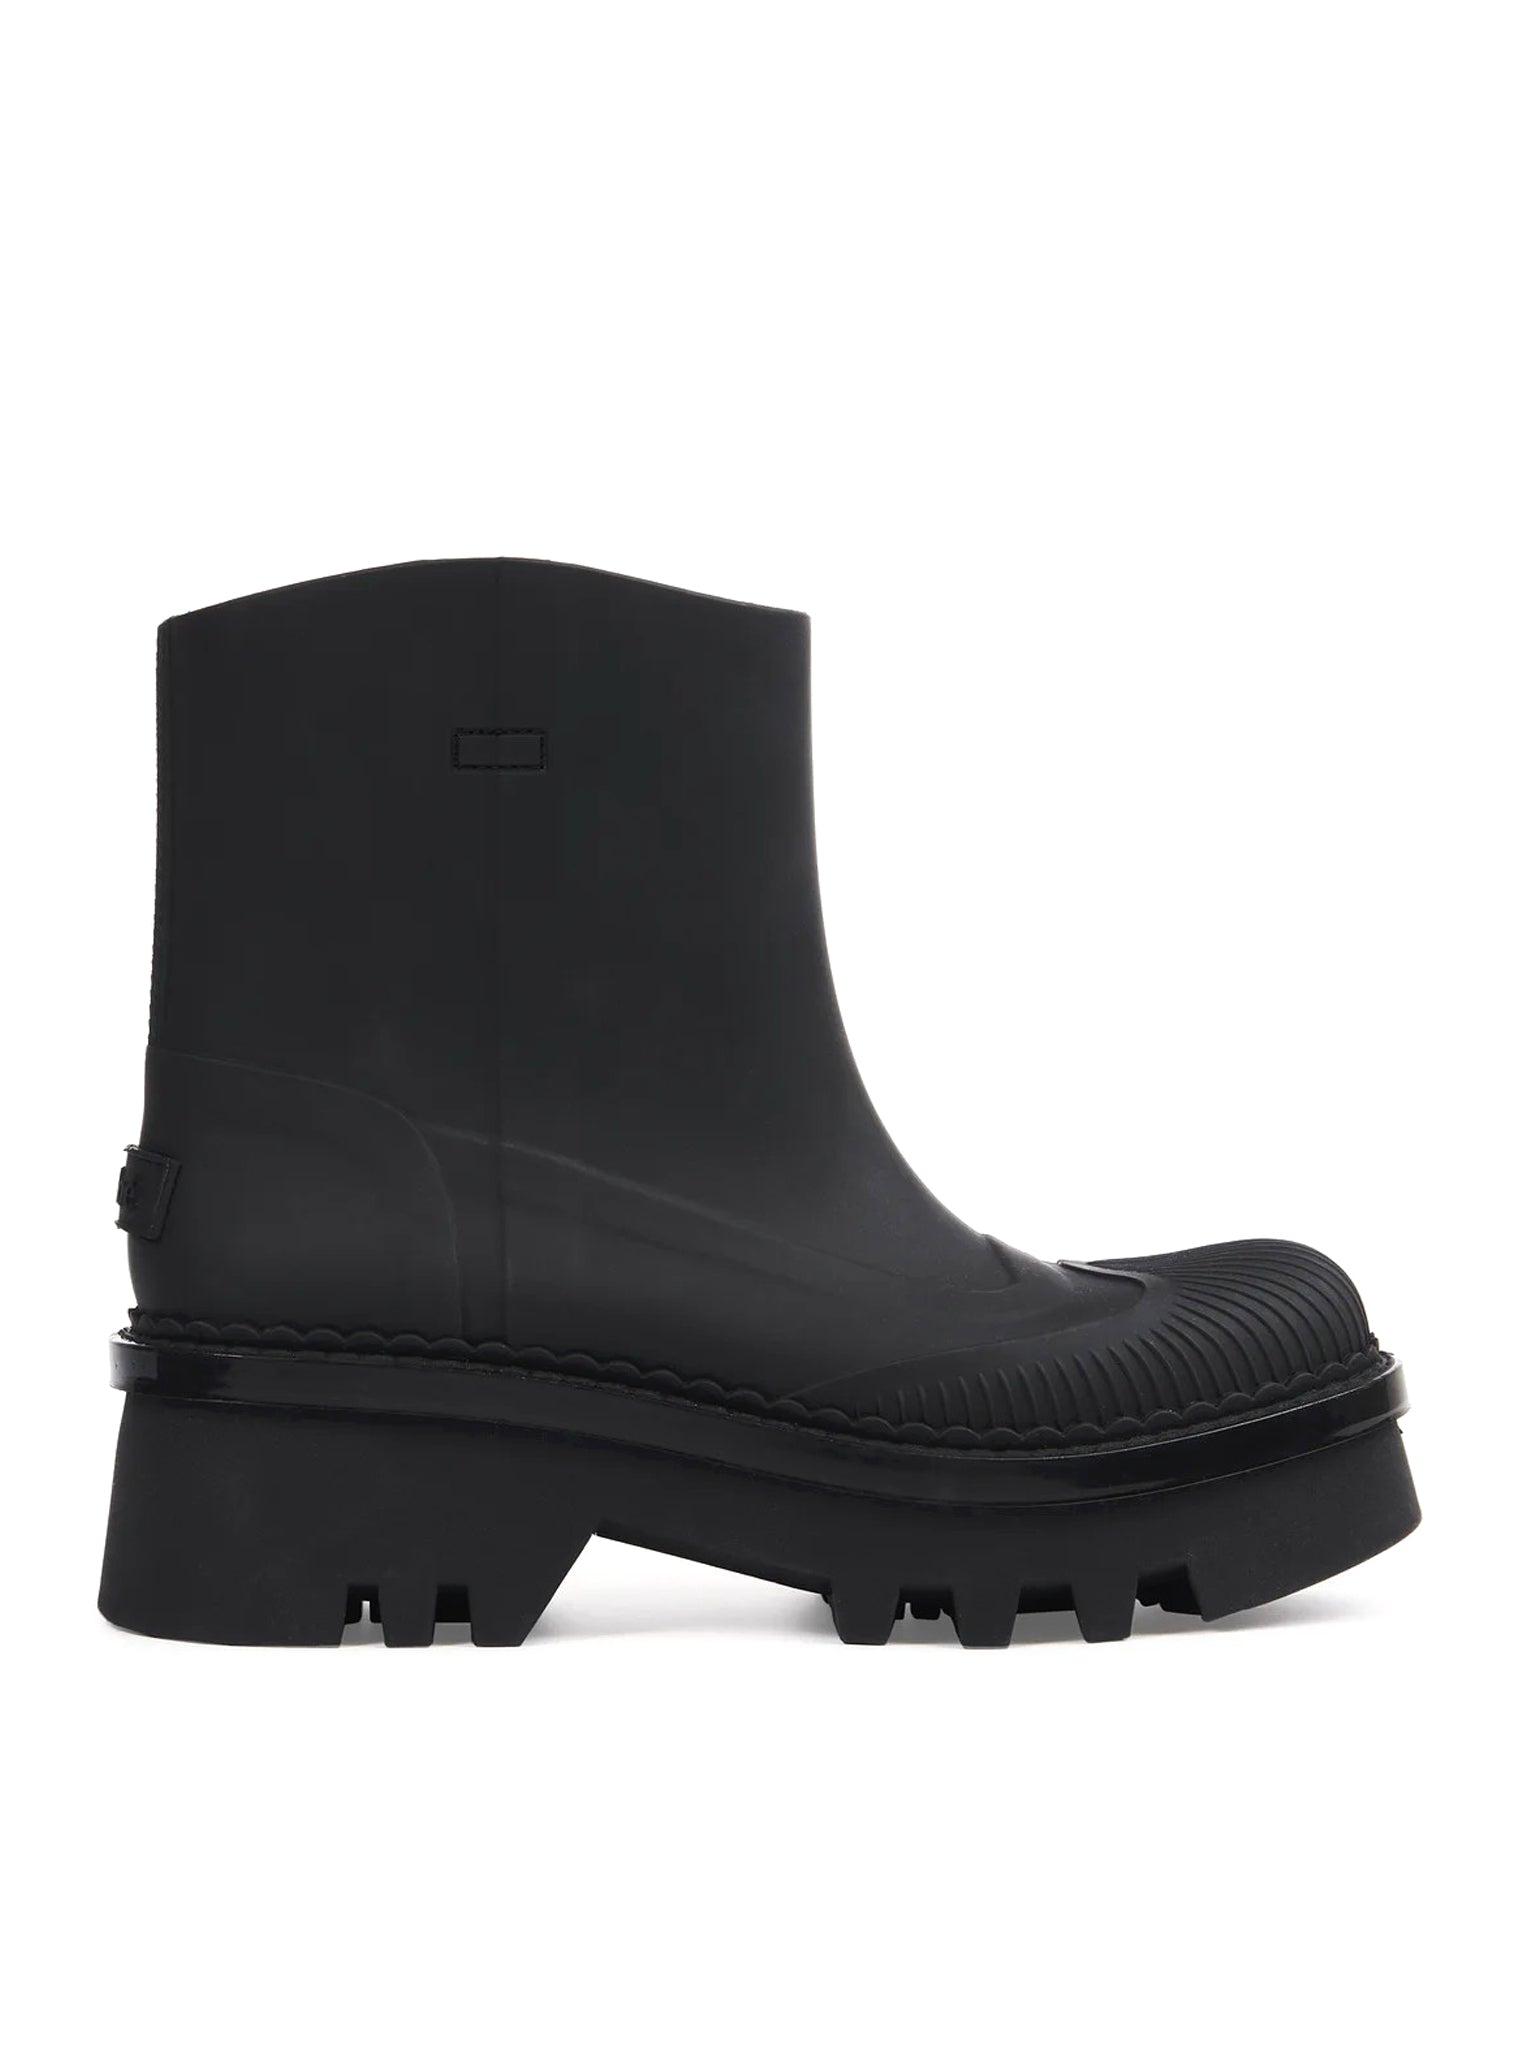 Chloé Raina Rain Boots in Black | Lyst